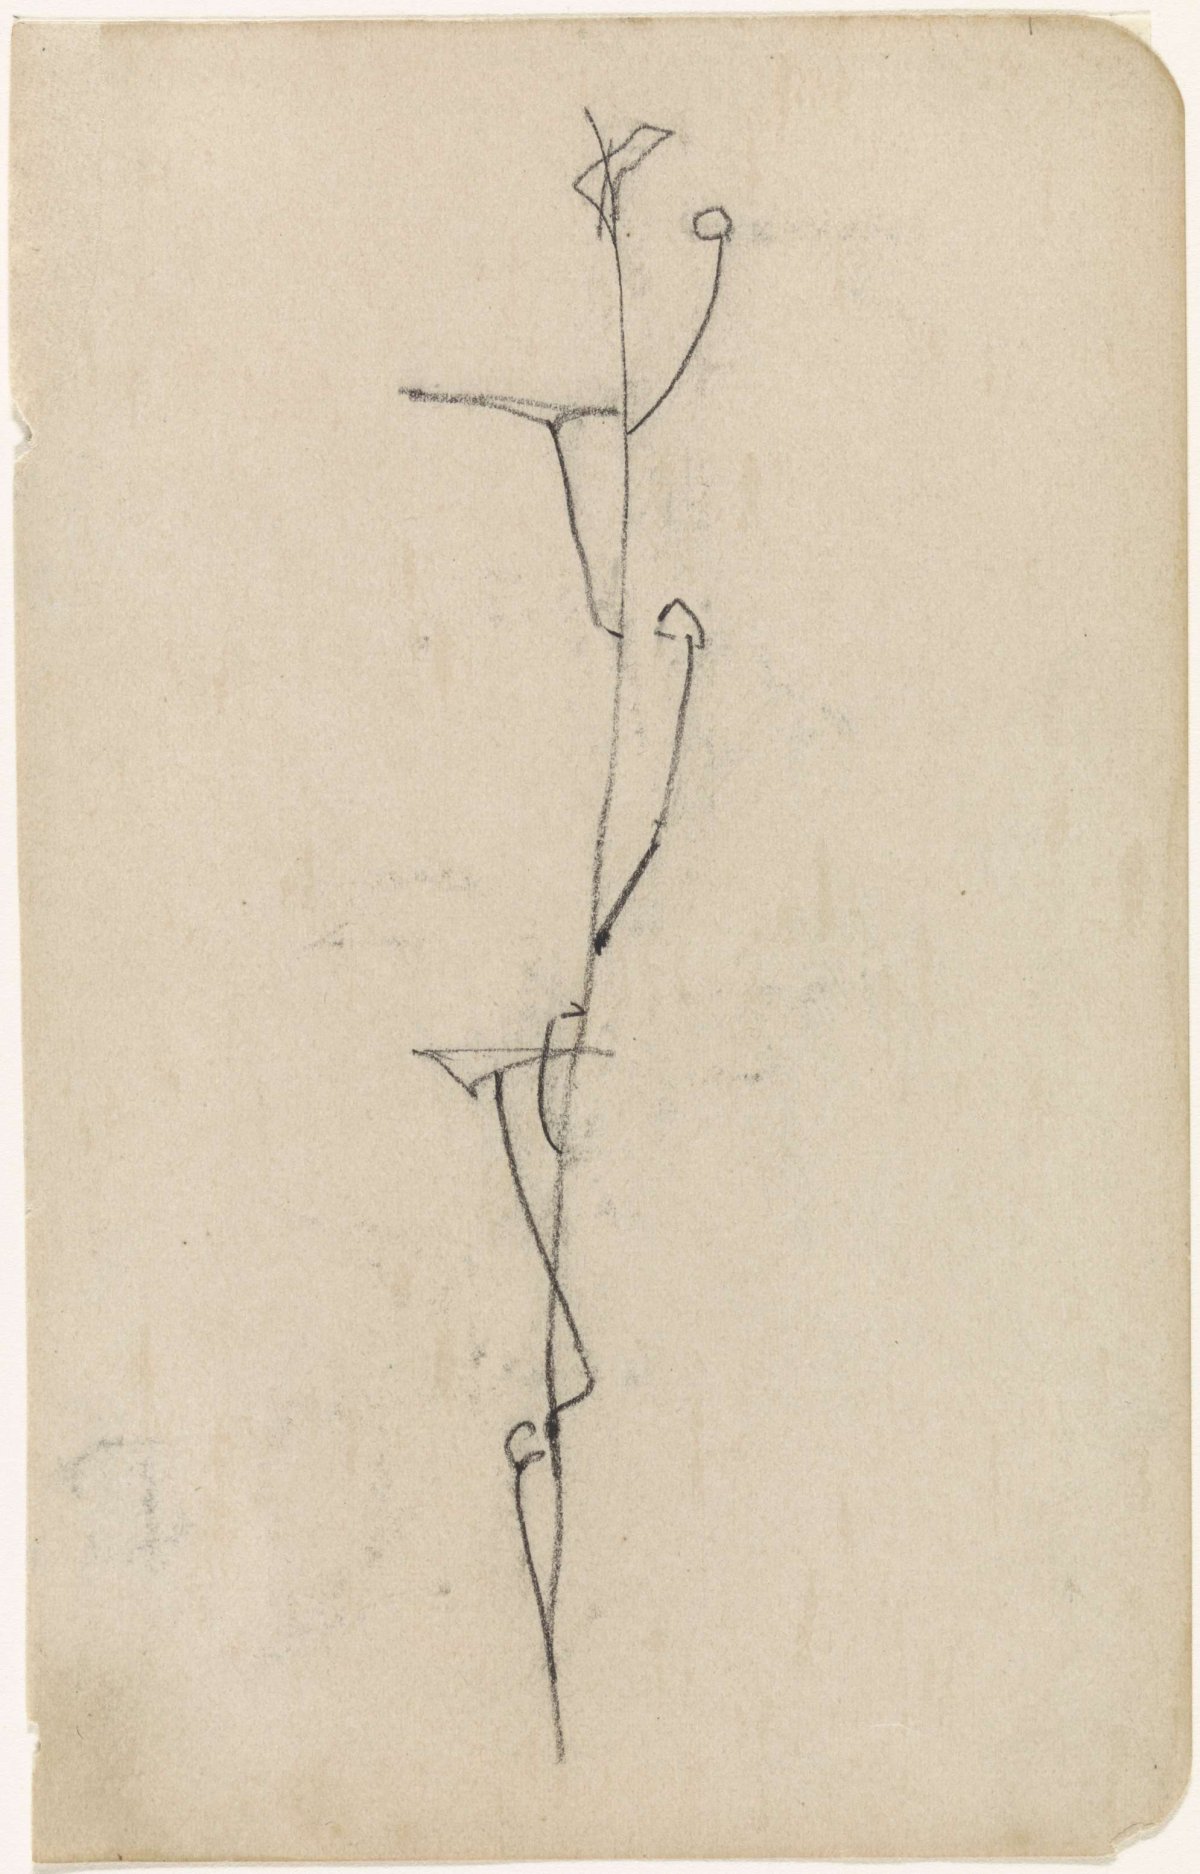 Sketch of a twig with delicate leaves, Gerrit Willem Dijsselhof, 1876 - 1924